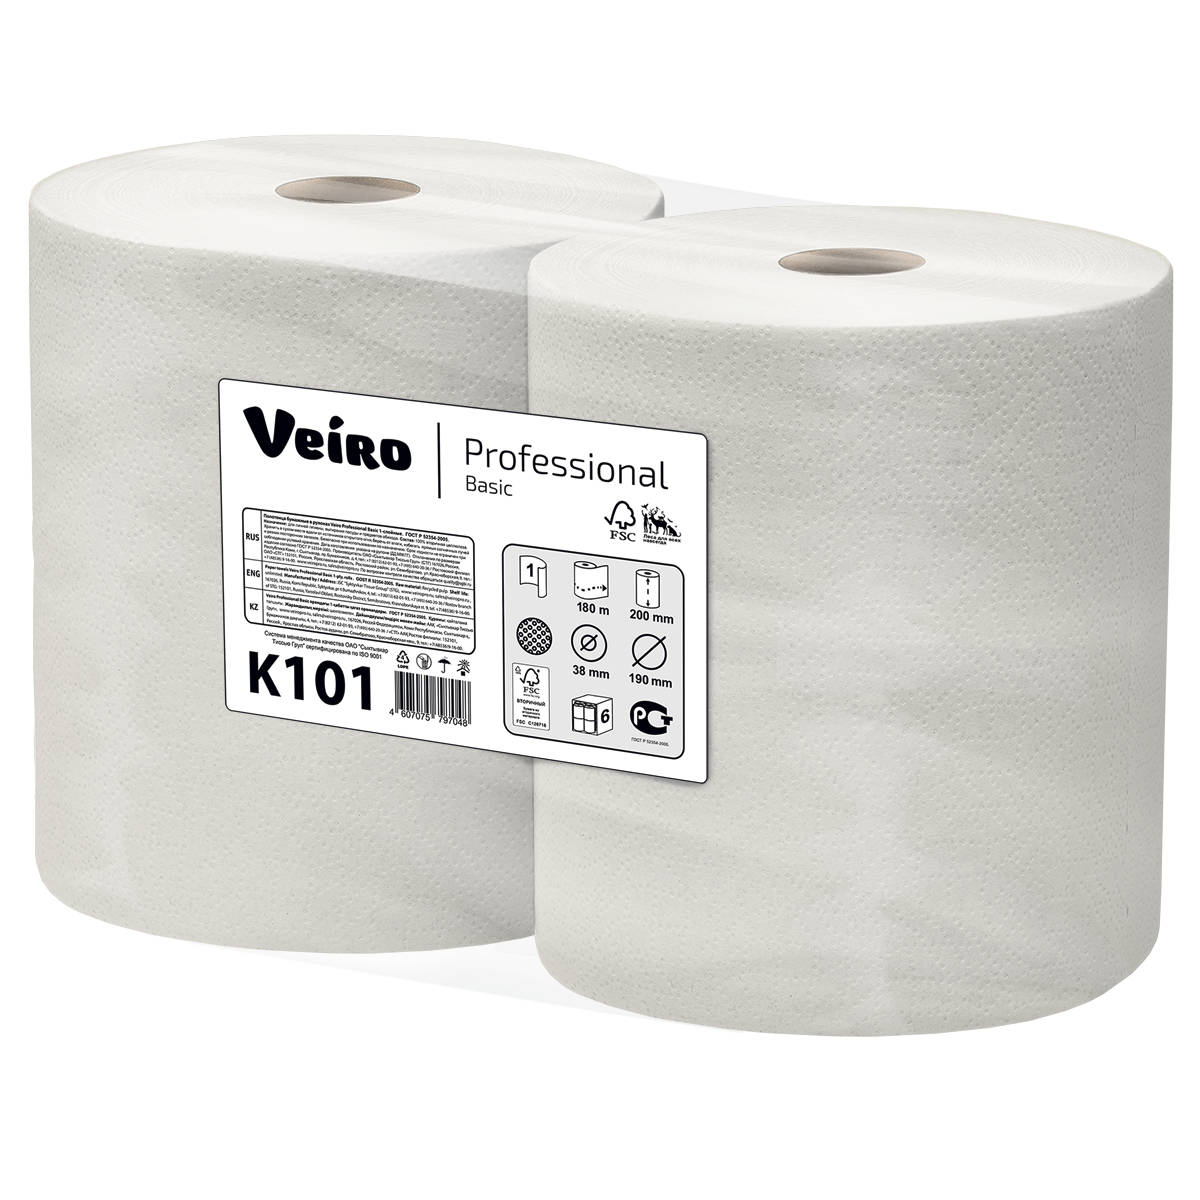 Полотенца бумажные длина рулона. T102 бумага туалетная Veiro professional Basic 1сл 200м белый (12рул в коробе). Полотенце бумажное в рулоне 2 сл. Veiro professional.Comfort 1/2шт. Полотенца Вейро к203. Полотенца бумажные в рулоне Veiro professional Basic 1-сл белые 300м цв арт. Kp105.